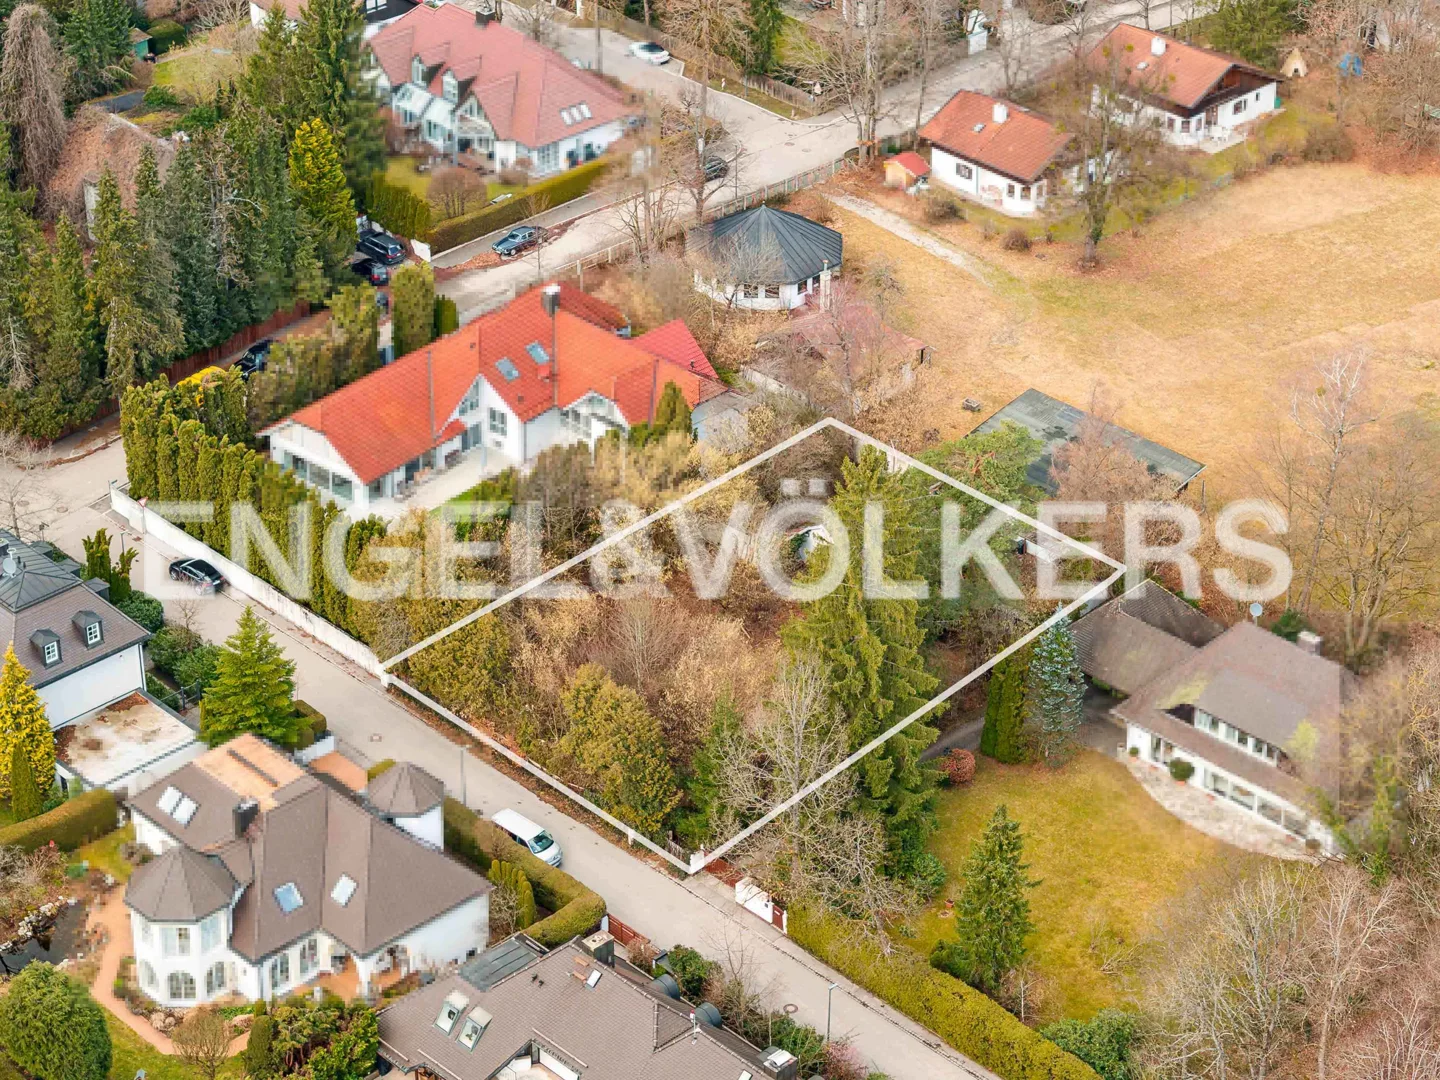 Exclusive building plot in prime location at Grünwalder Forst